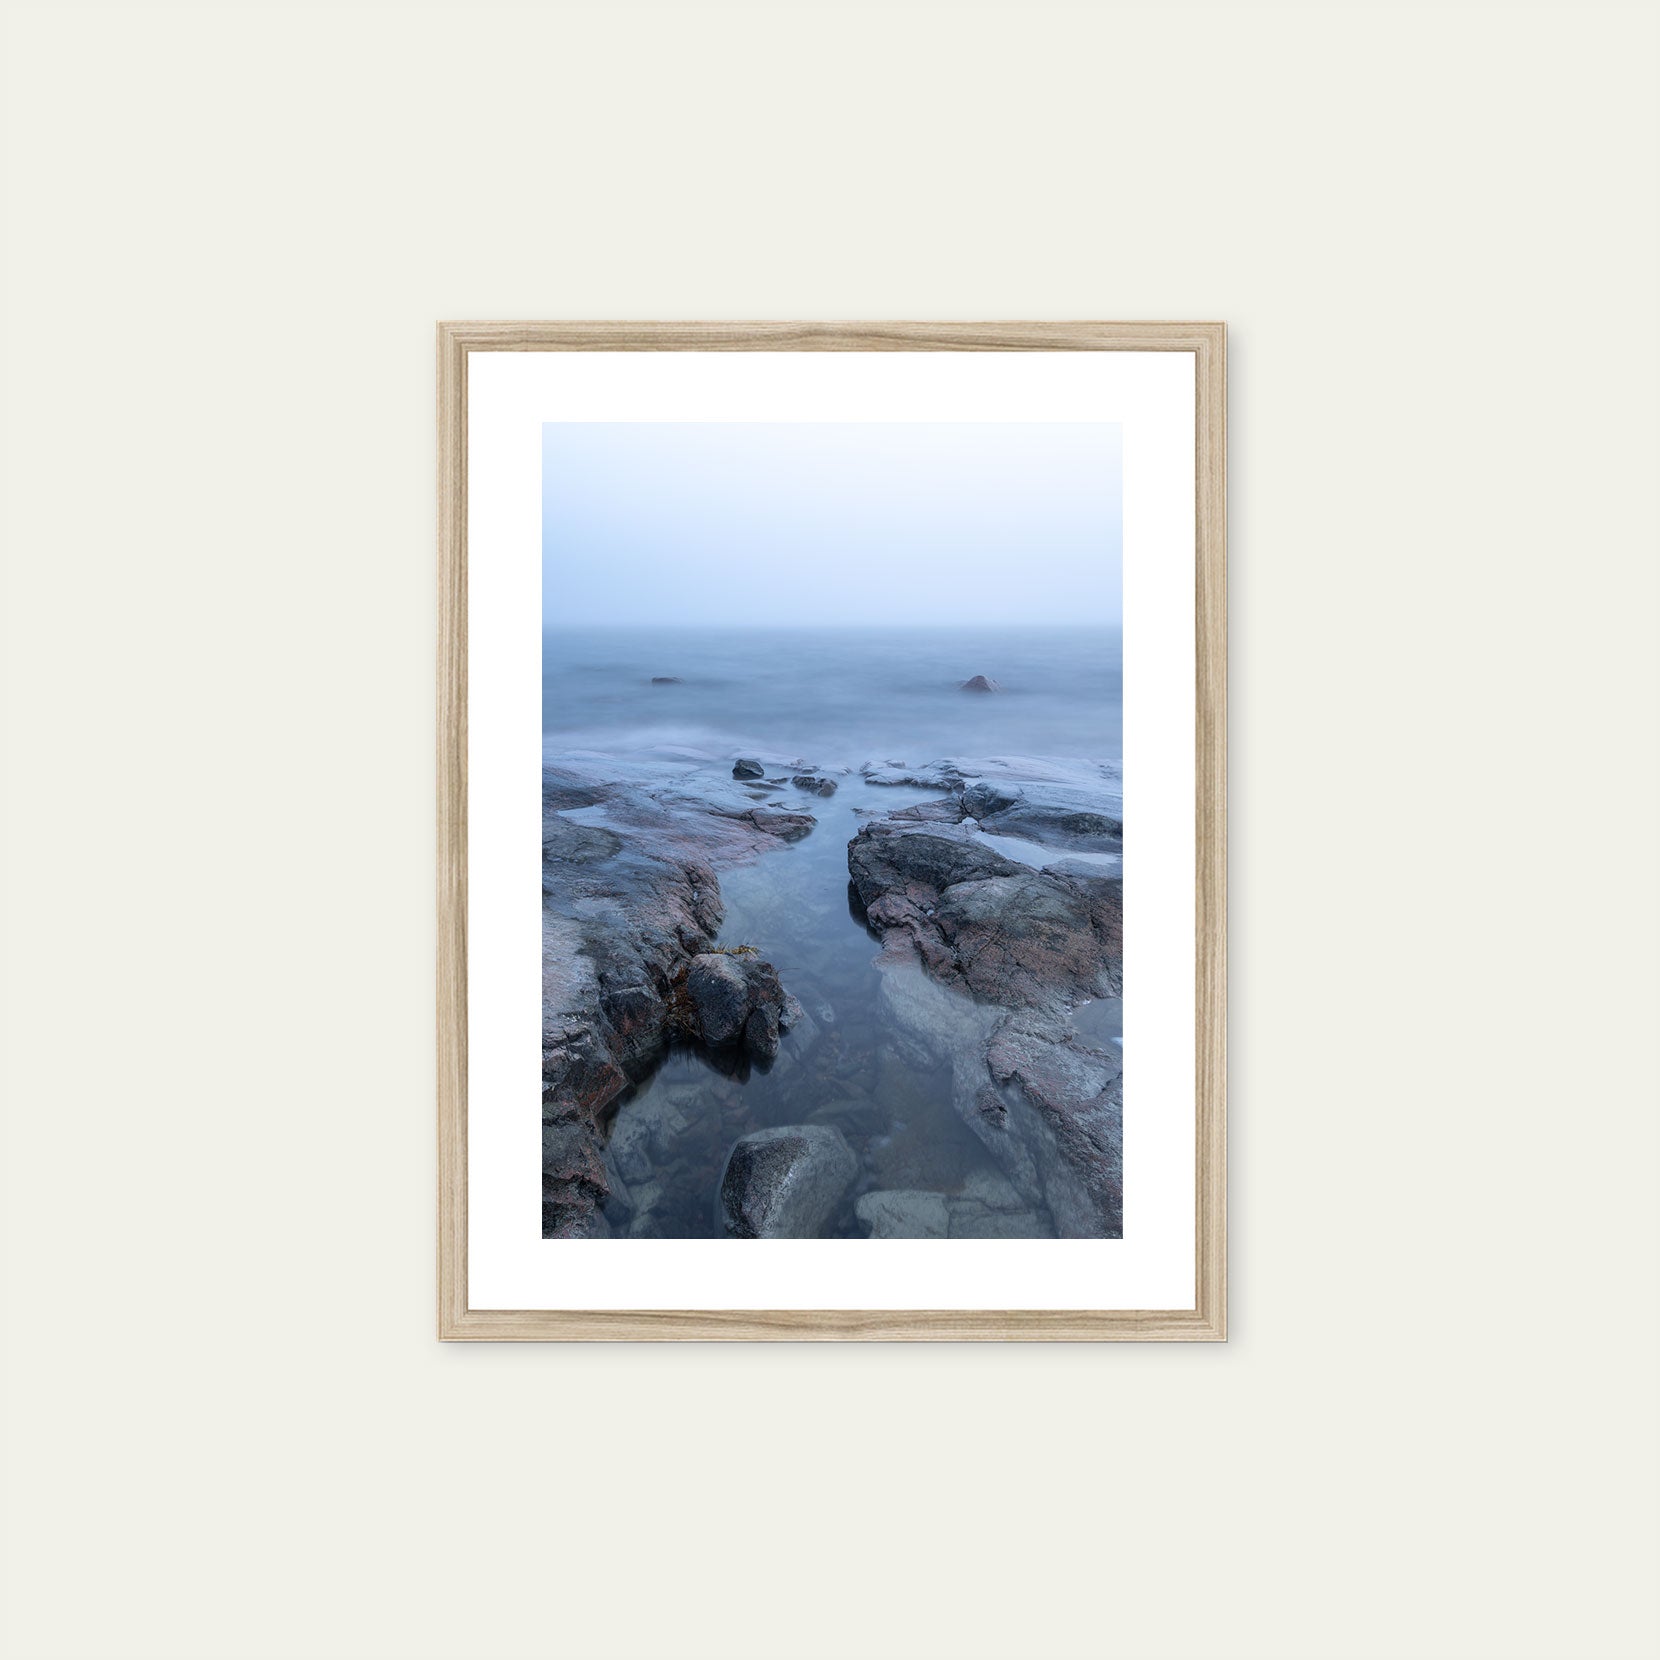 A wood framed print of a rocky coastline in fog